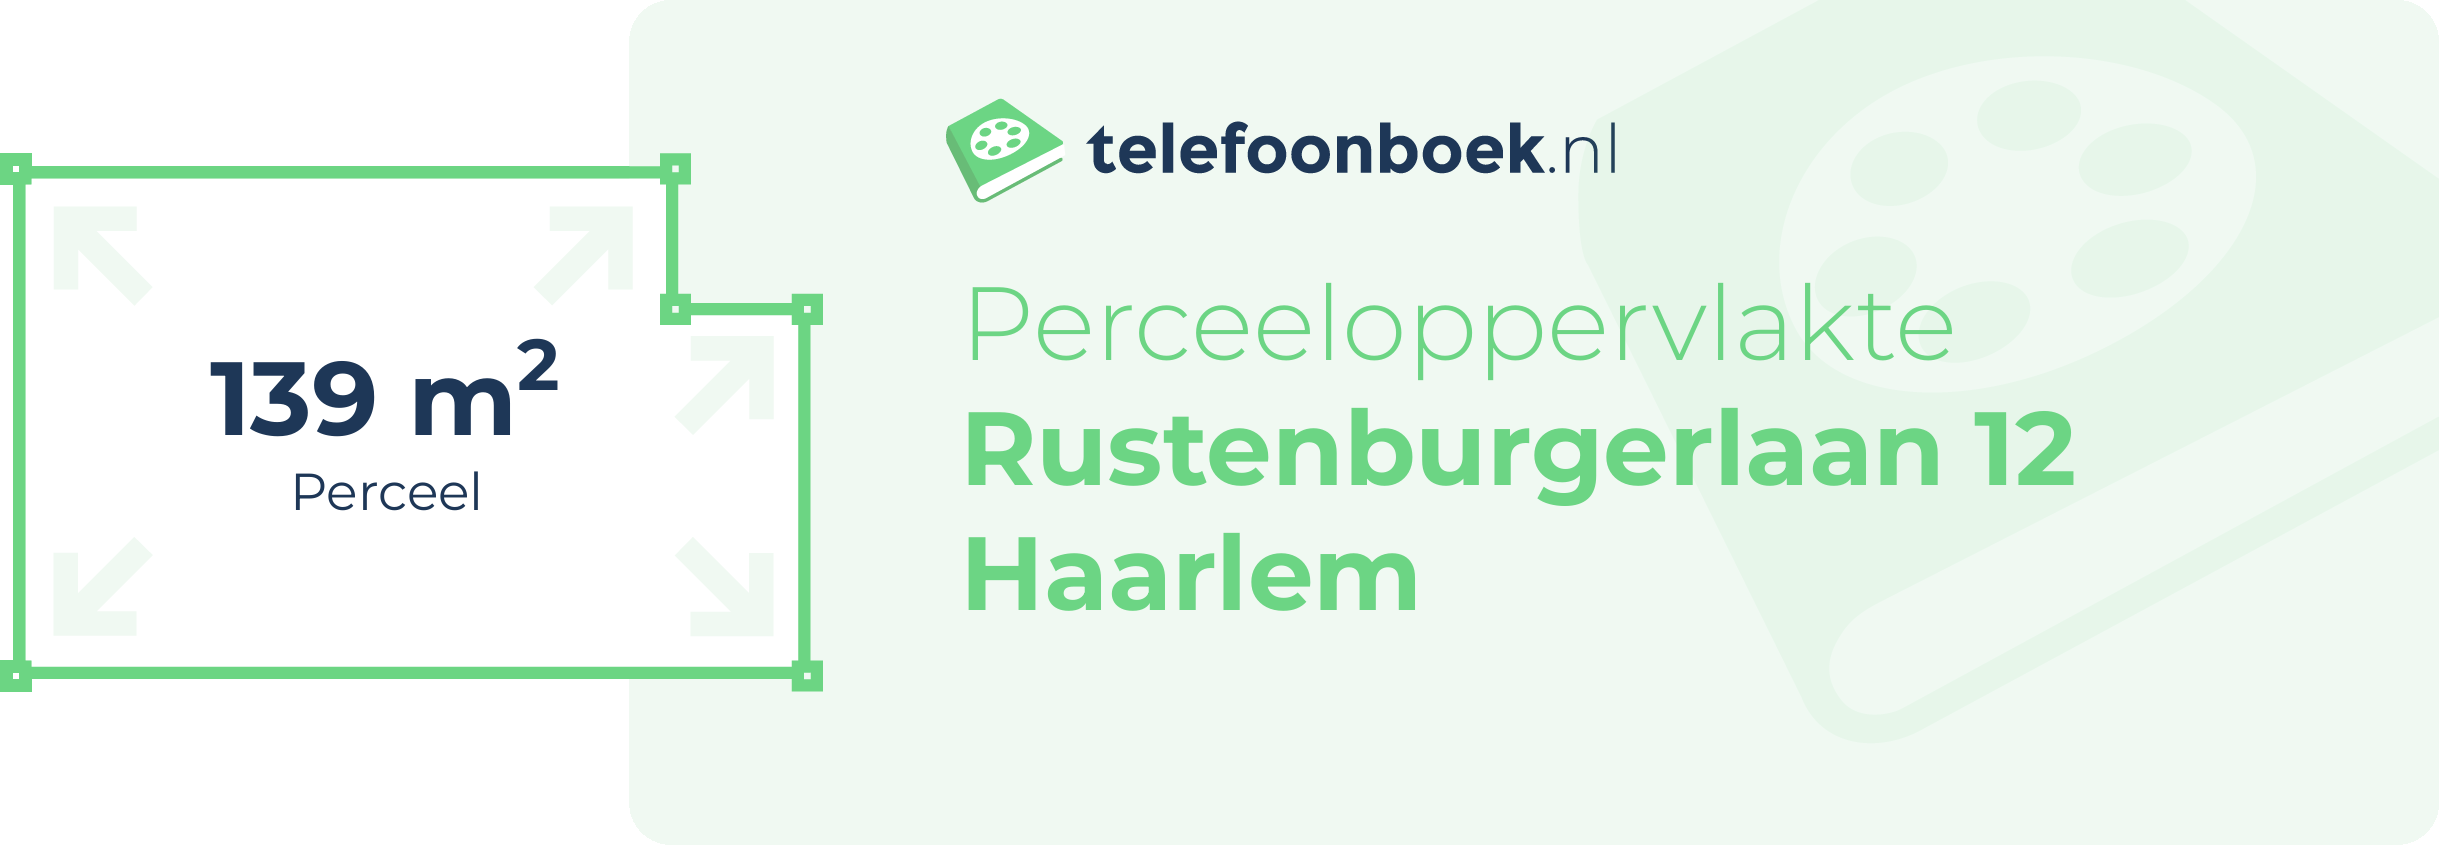 Perceeloppervlakte Rustenburgerlaan 12 Haarlem